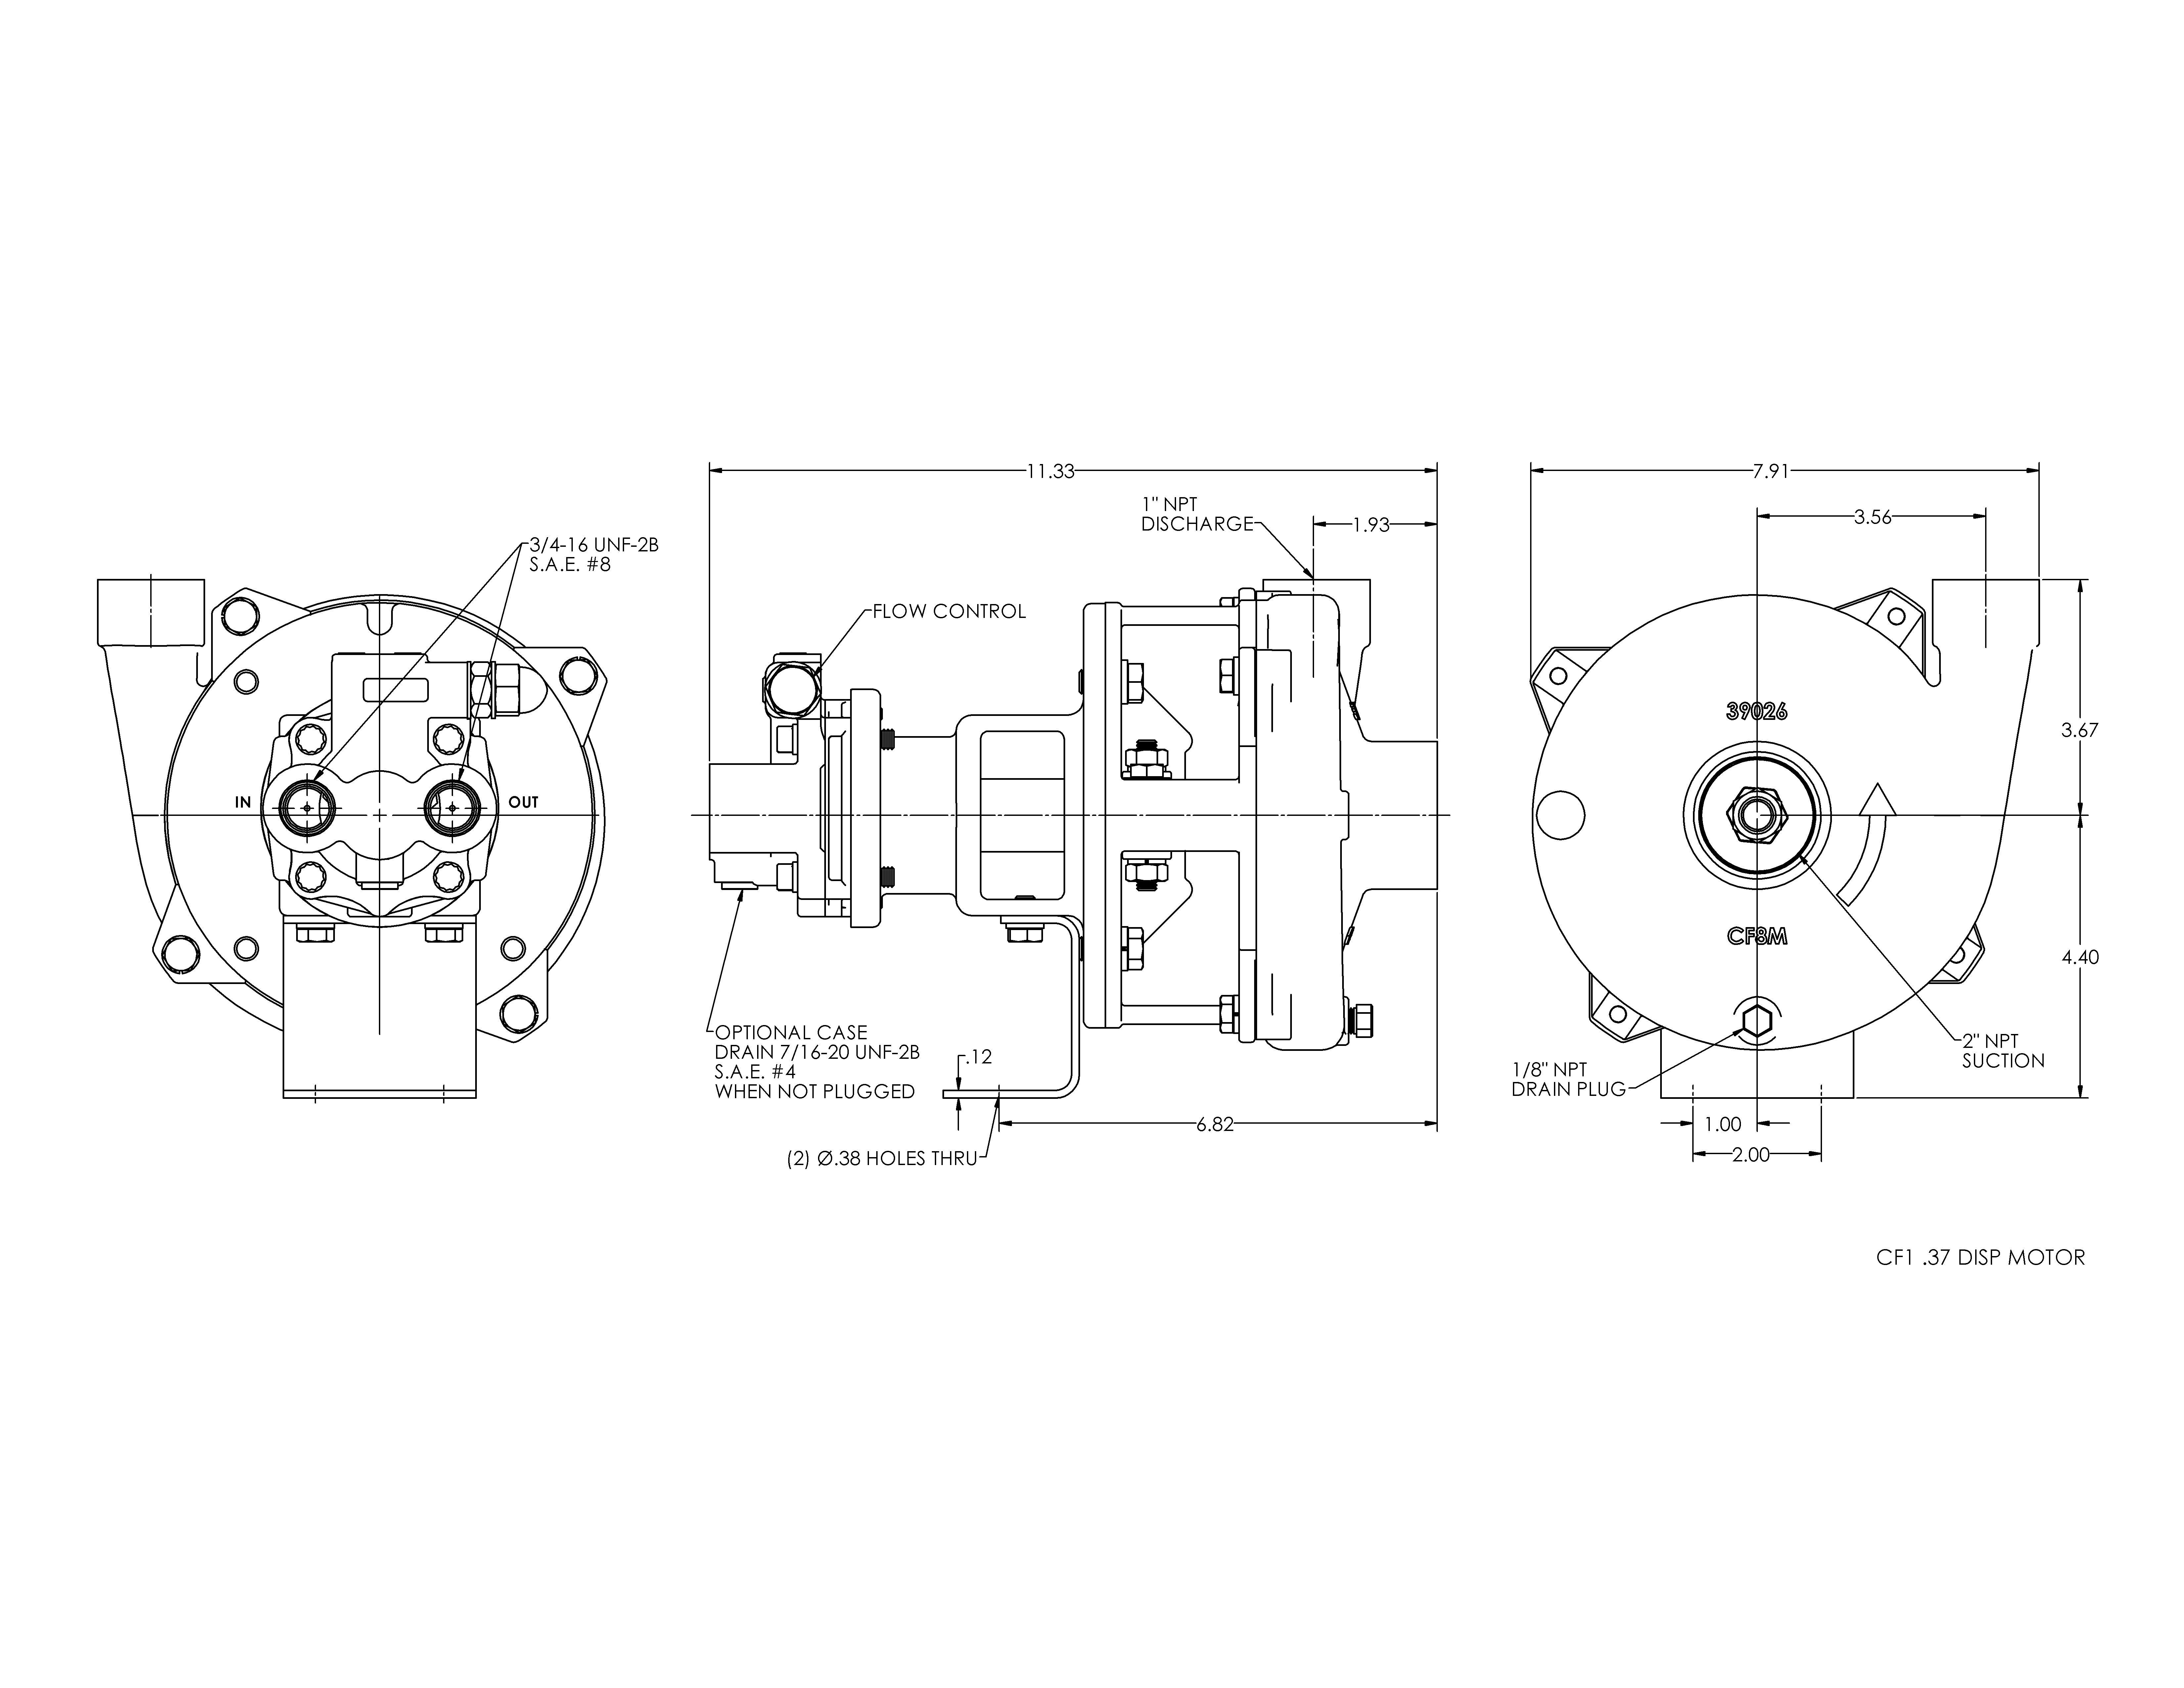 chemflo-1-hydraulic_drawing-cf1-37-disp-motor